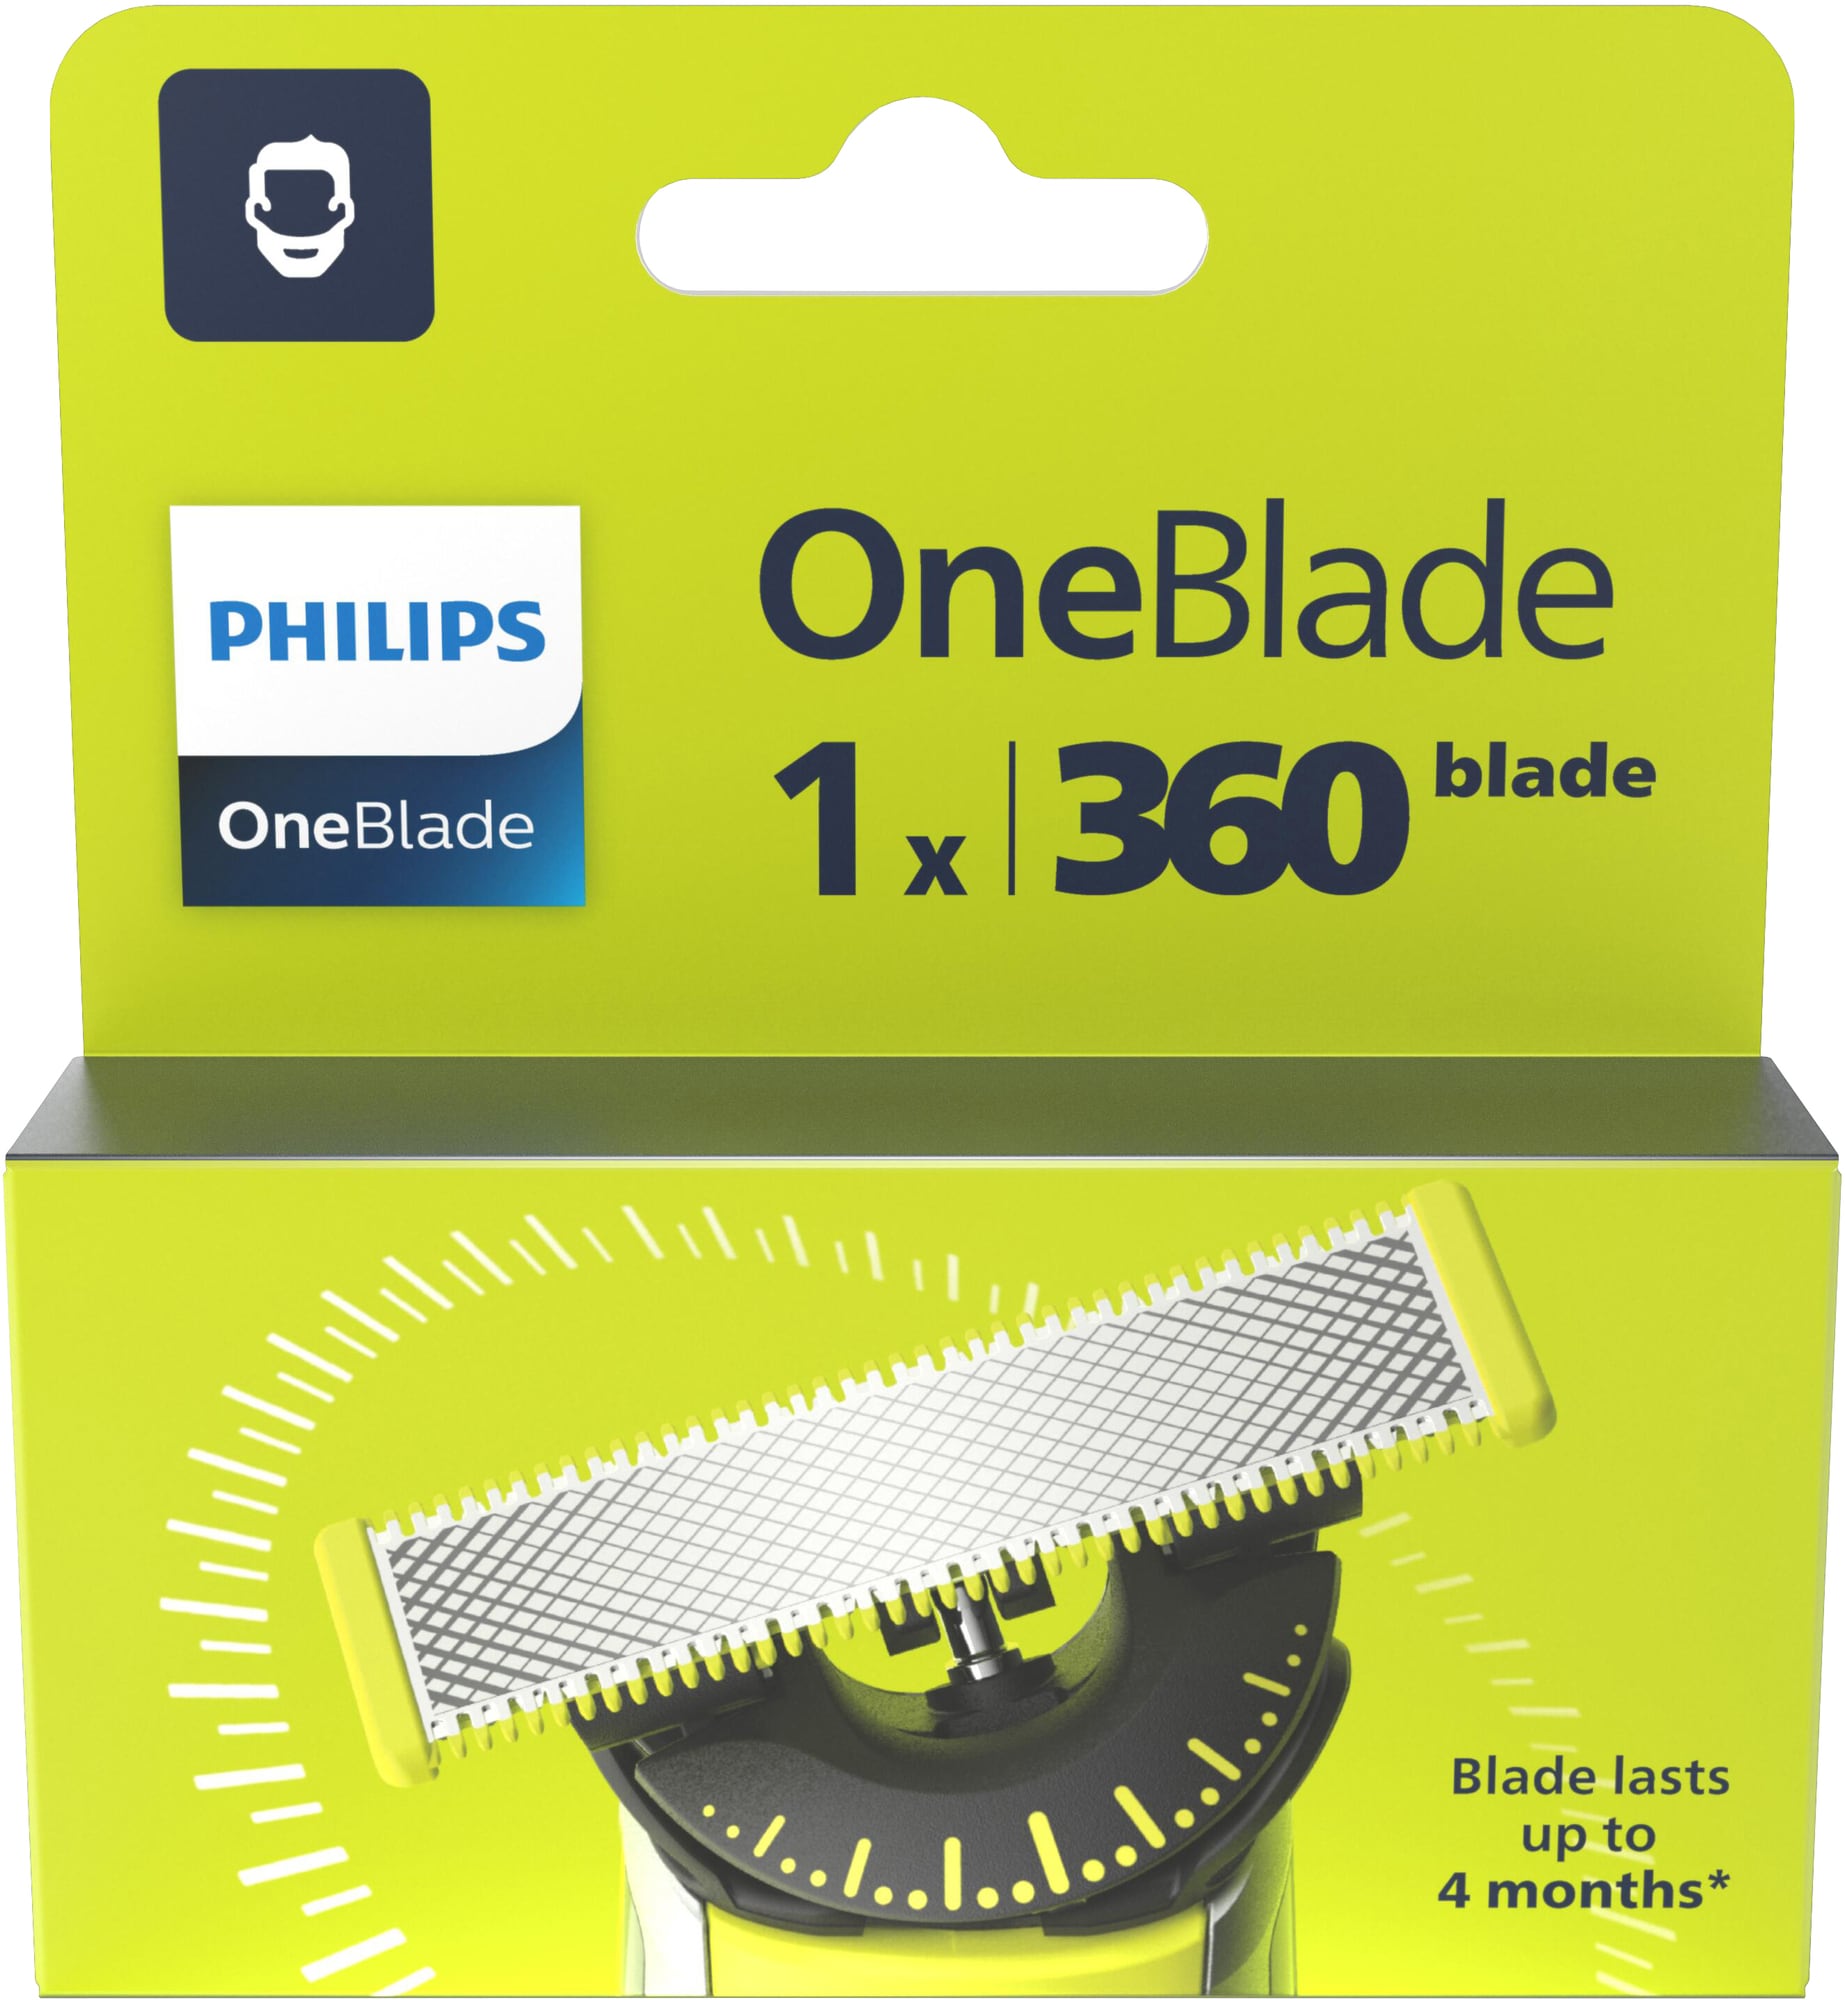 Philips OneBlade 360 udskiftningsblad QP410/50 thumbnail